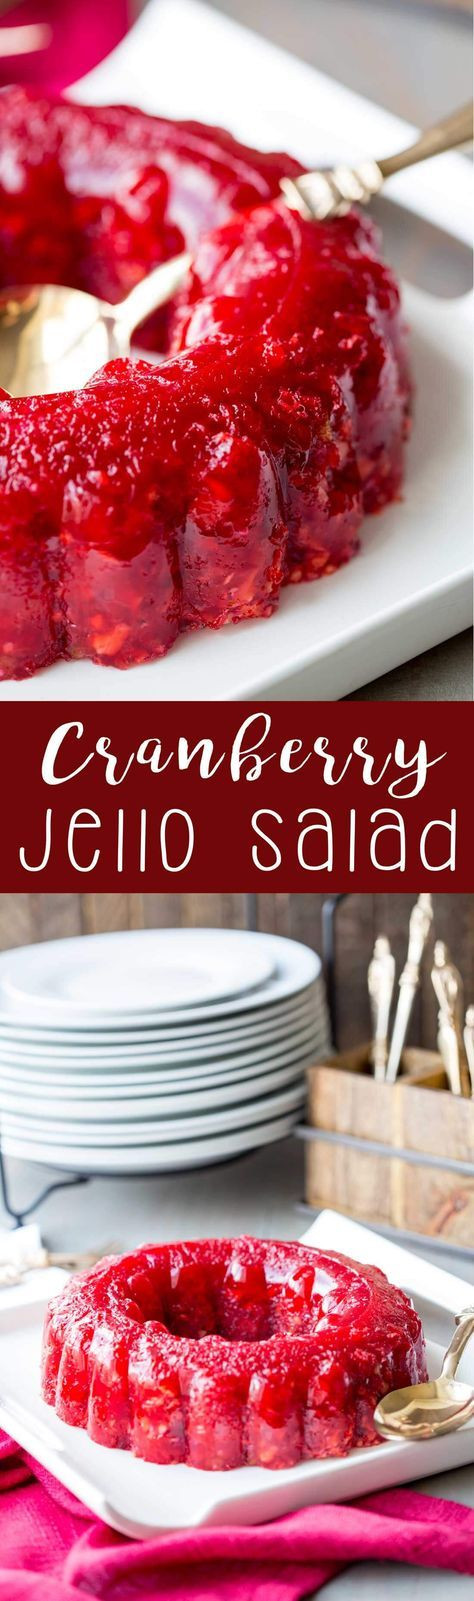 Cranberry Jello Salad Recipes Thanksgiving
 17 Best ideas about Cranberry Jello Salad on Pinterest